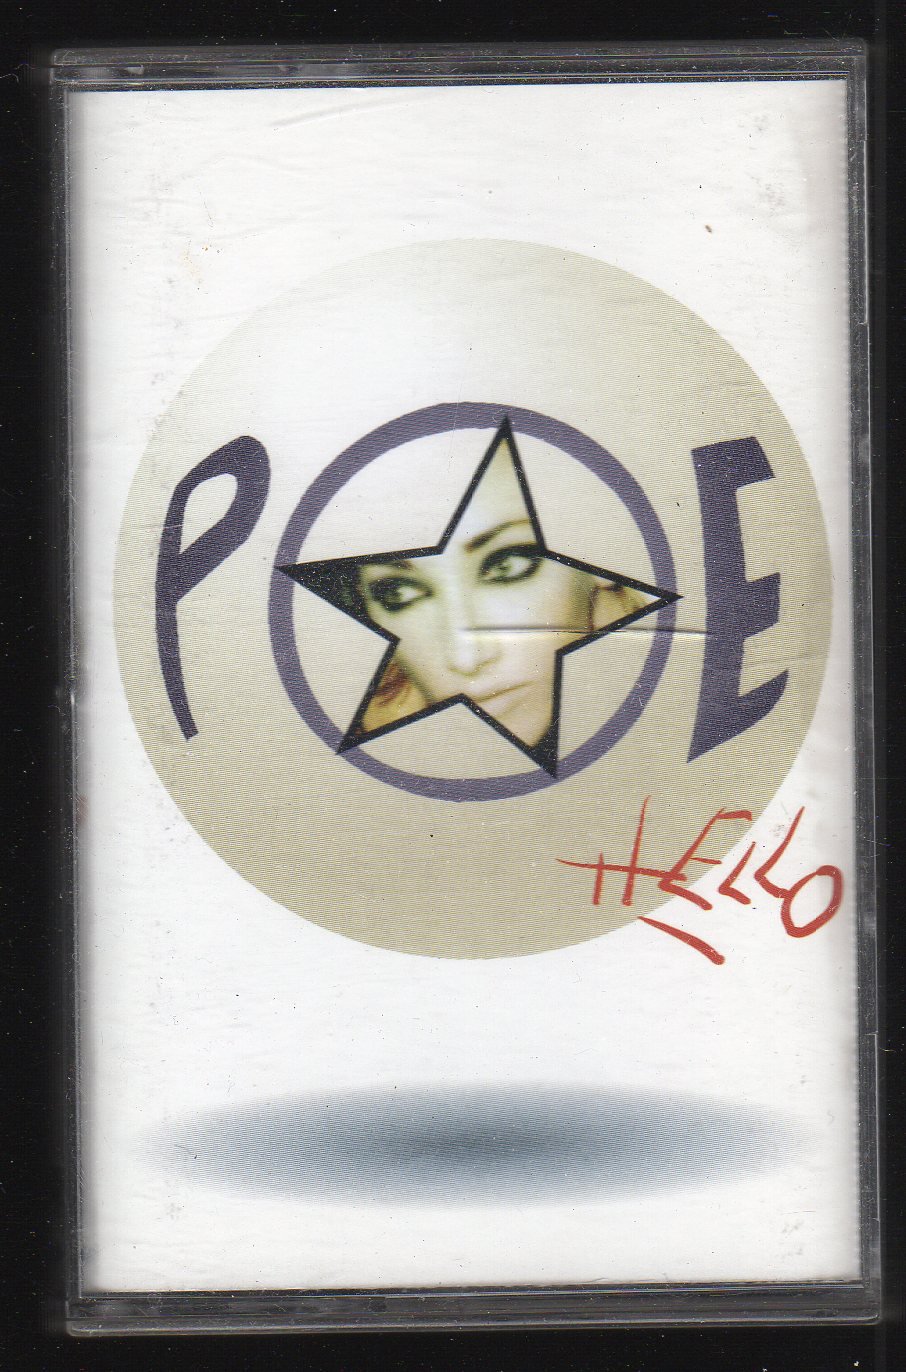 Poe - Hello Cassette Tape